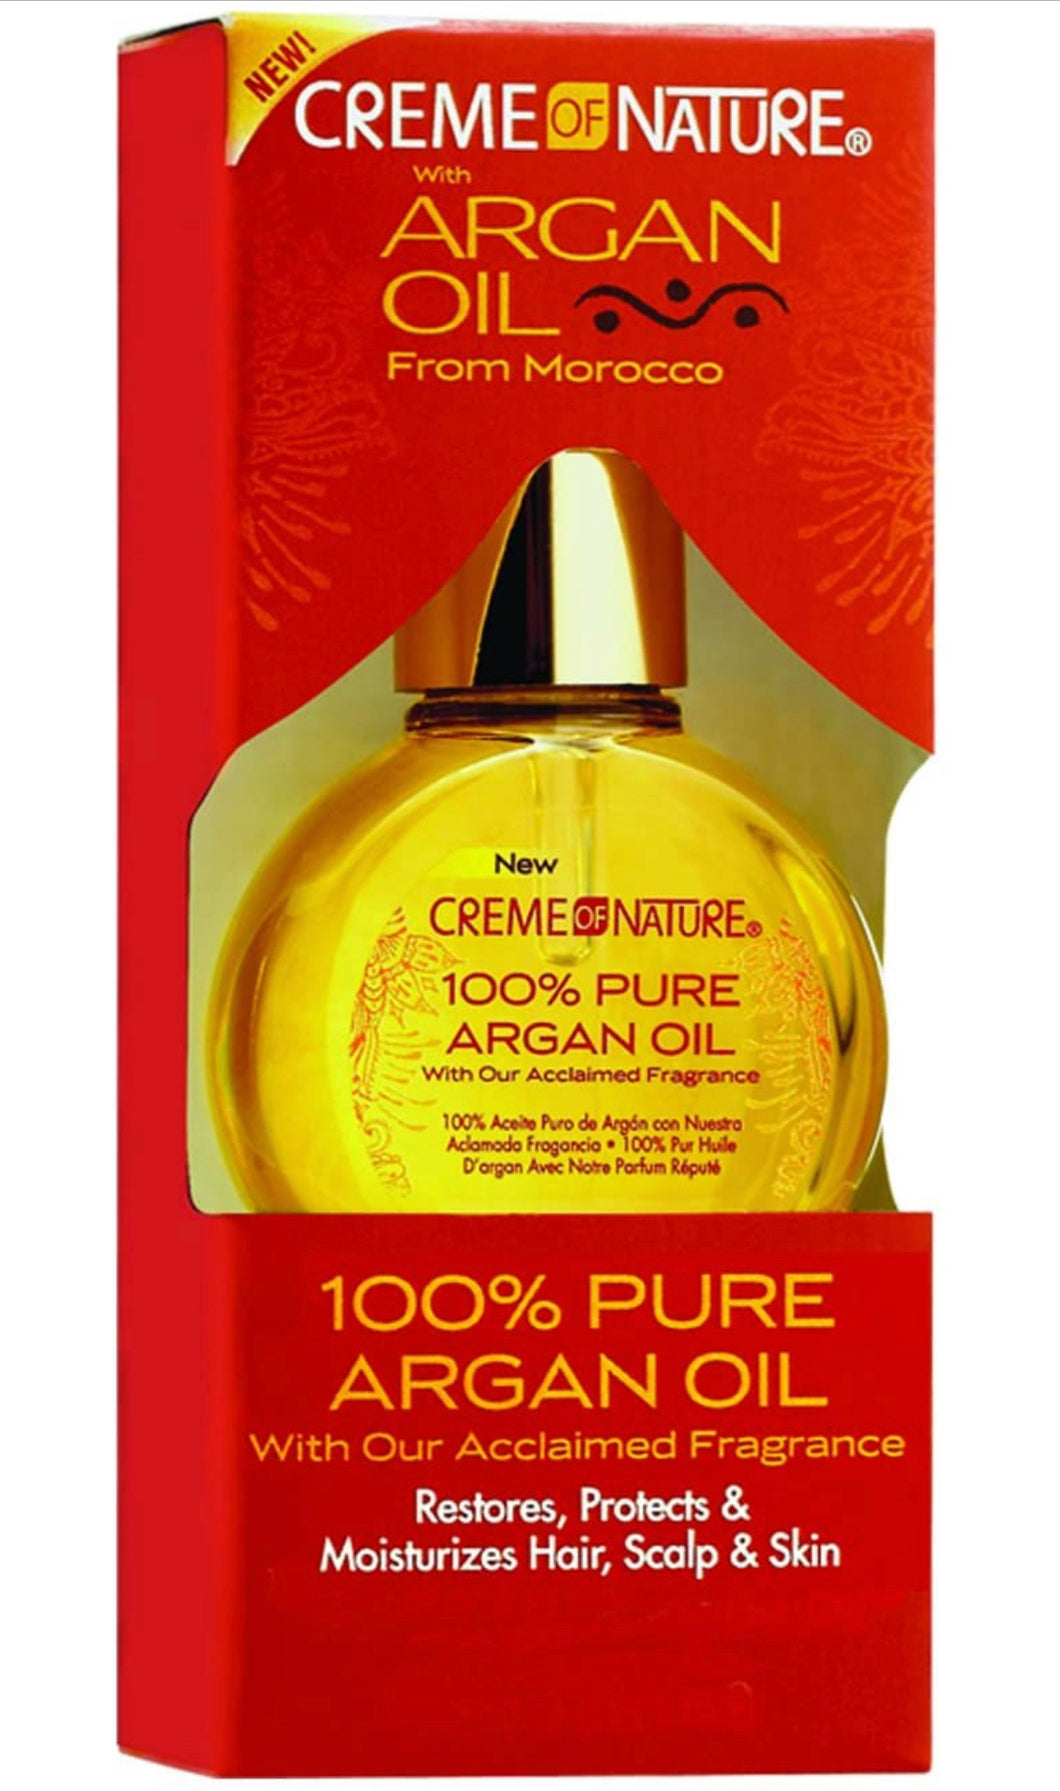 Crème of Nature 100% Argan Oil